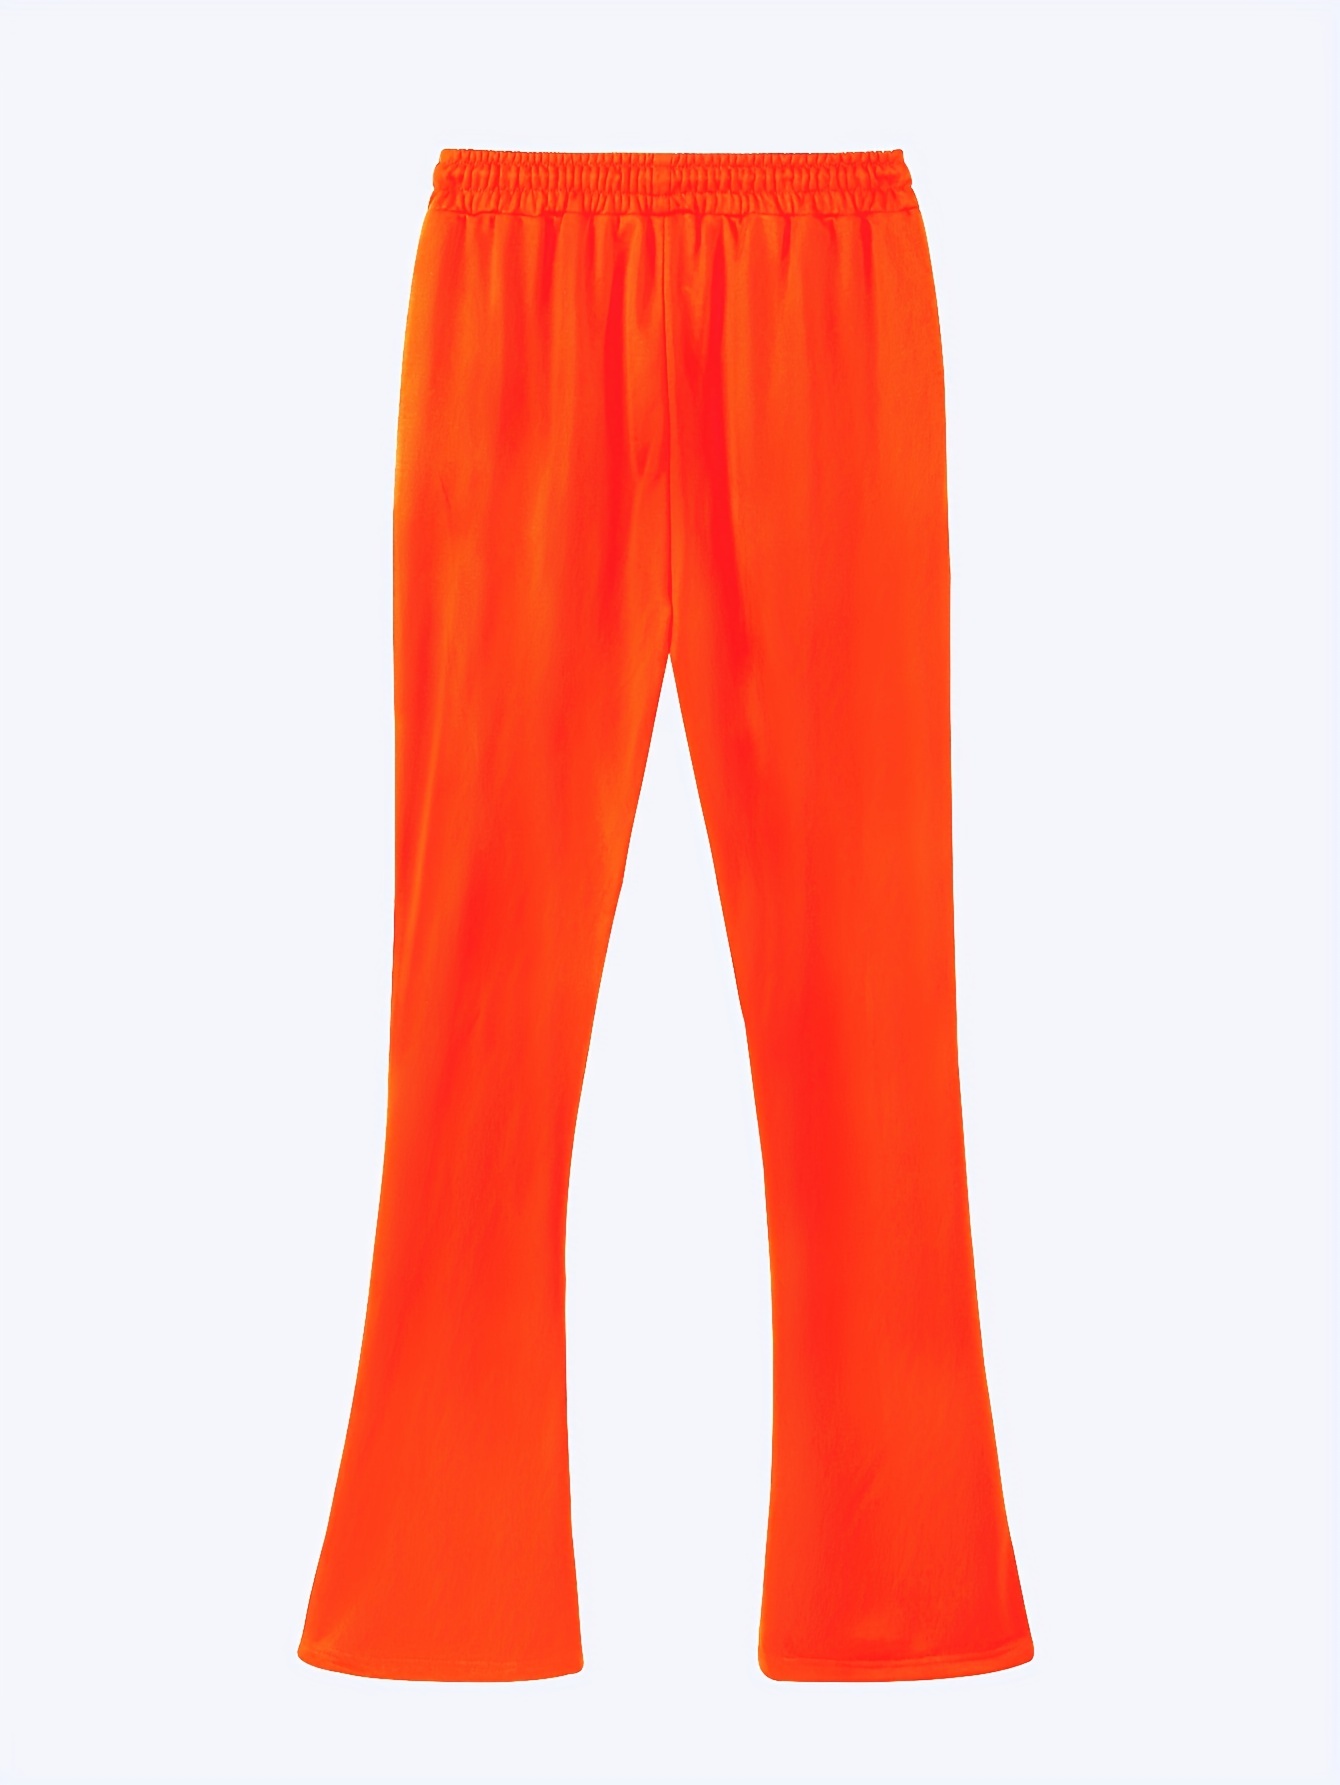 Rock More Print Orange Track Pants, High Waist Buckle Jogger Pants